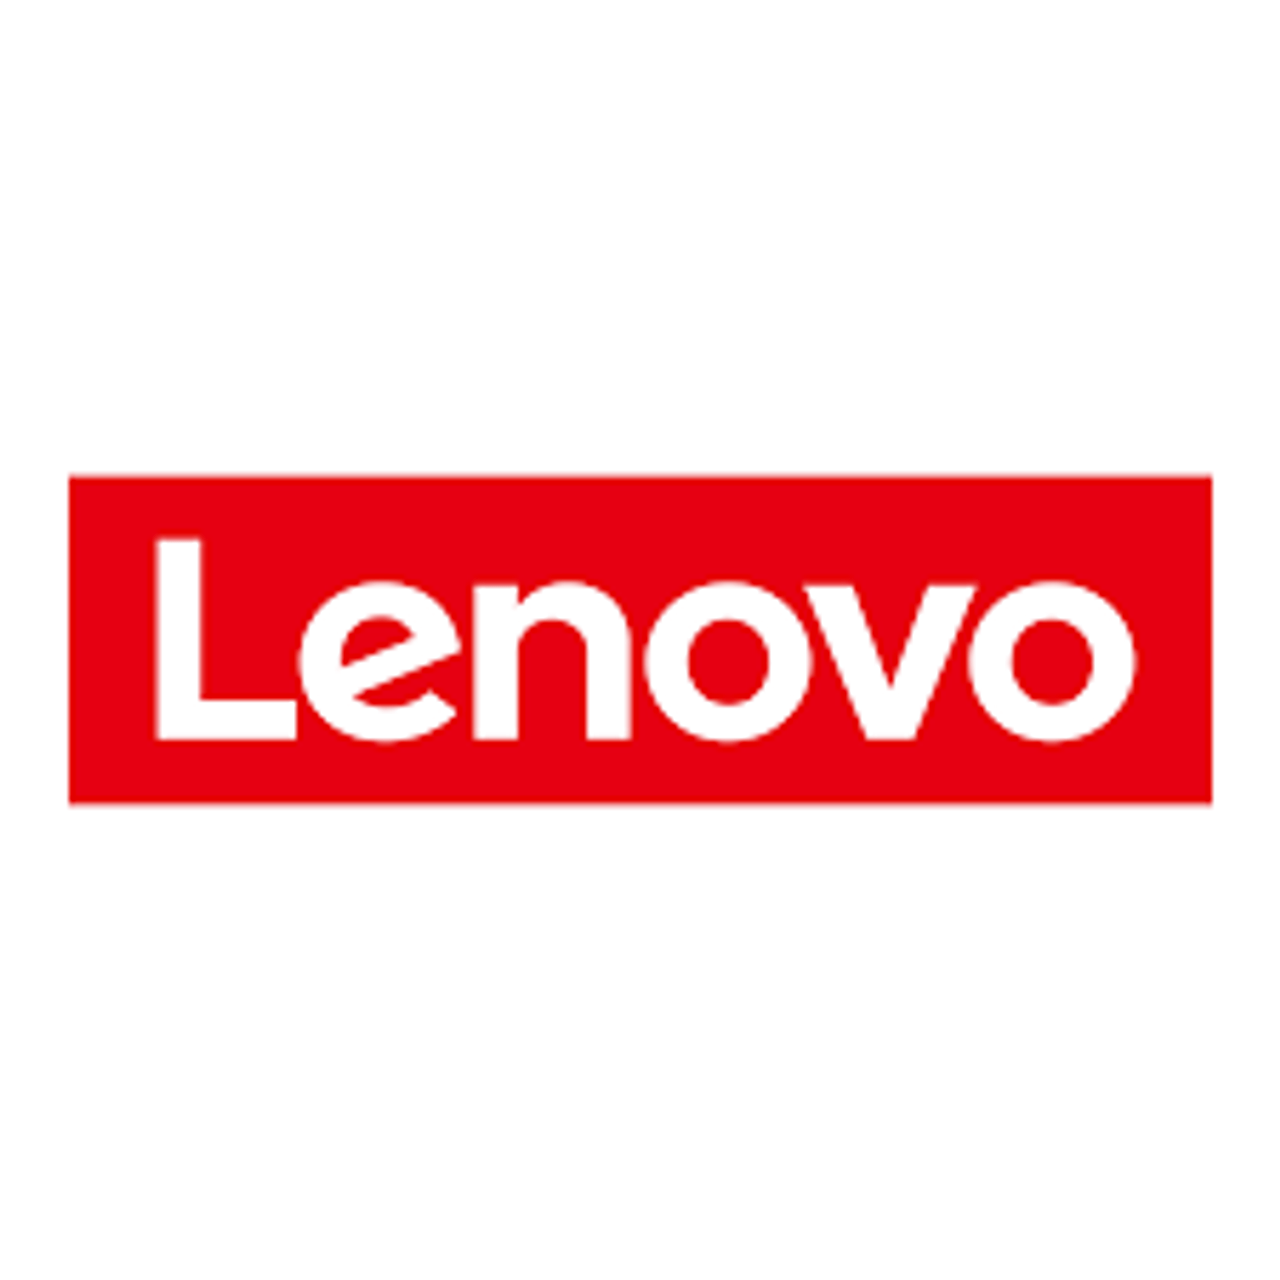 Lenovo - Open Source 900 GB Hard Drive - 2.5" Internal - SAS (6Gb/s SAS)